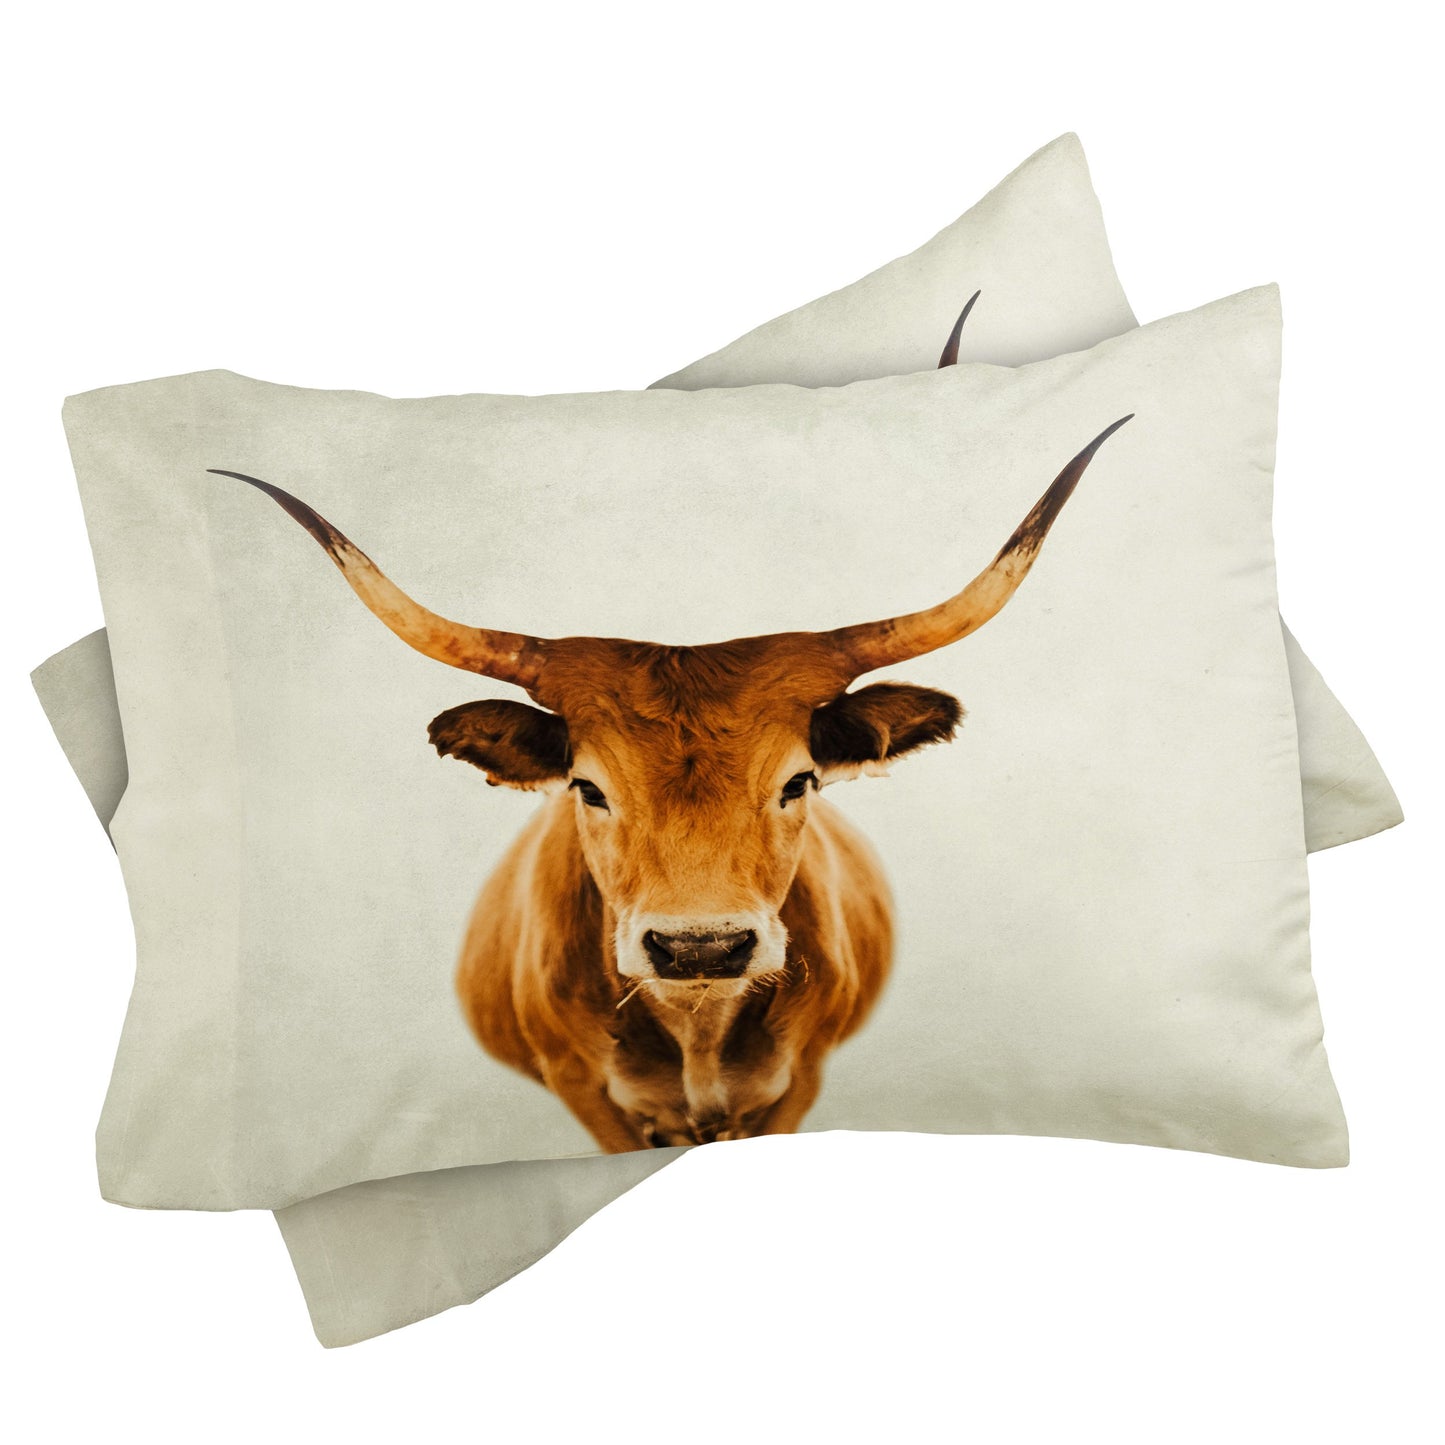 Bull 2 Pillow Shams - bedding, blanket, bull, bull head, bullhead, bullheas, bulls, case, cases, cow, cow pillow, cowgirl, cows, decor, farm, home, longhorn, pillow, pillow case, pillow sham, pillow shams, pillows, ranch, ranchhome, sham, shams, western, western pillow -  - Baha Ranch Western Wear